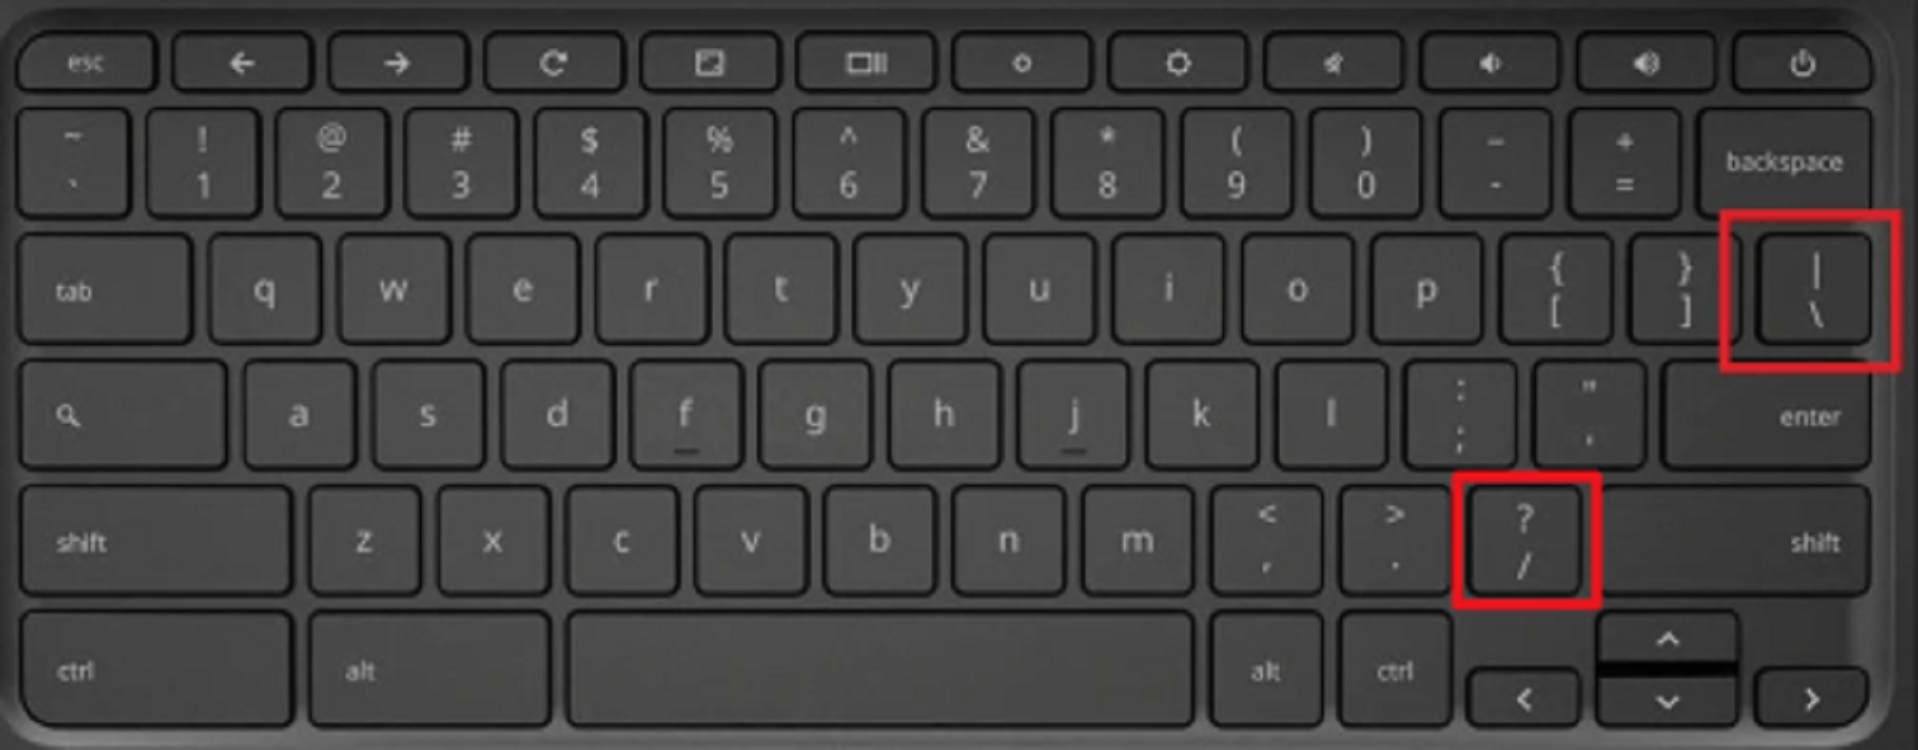 Forward Slash And Backslash Keys On Windows Keyboard2 